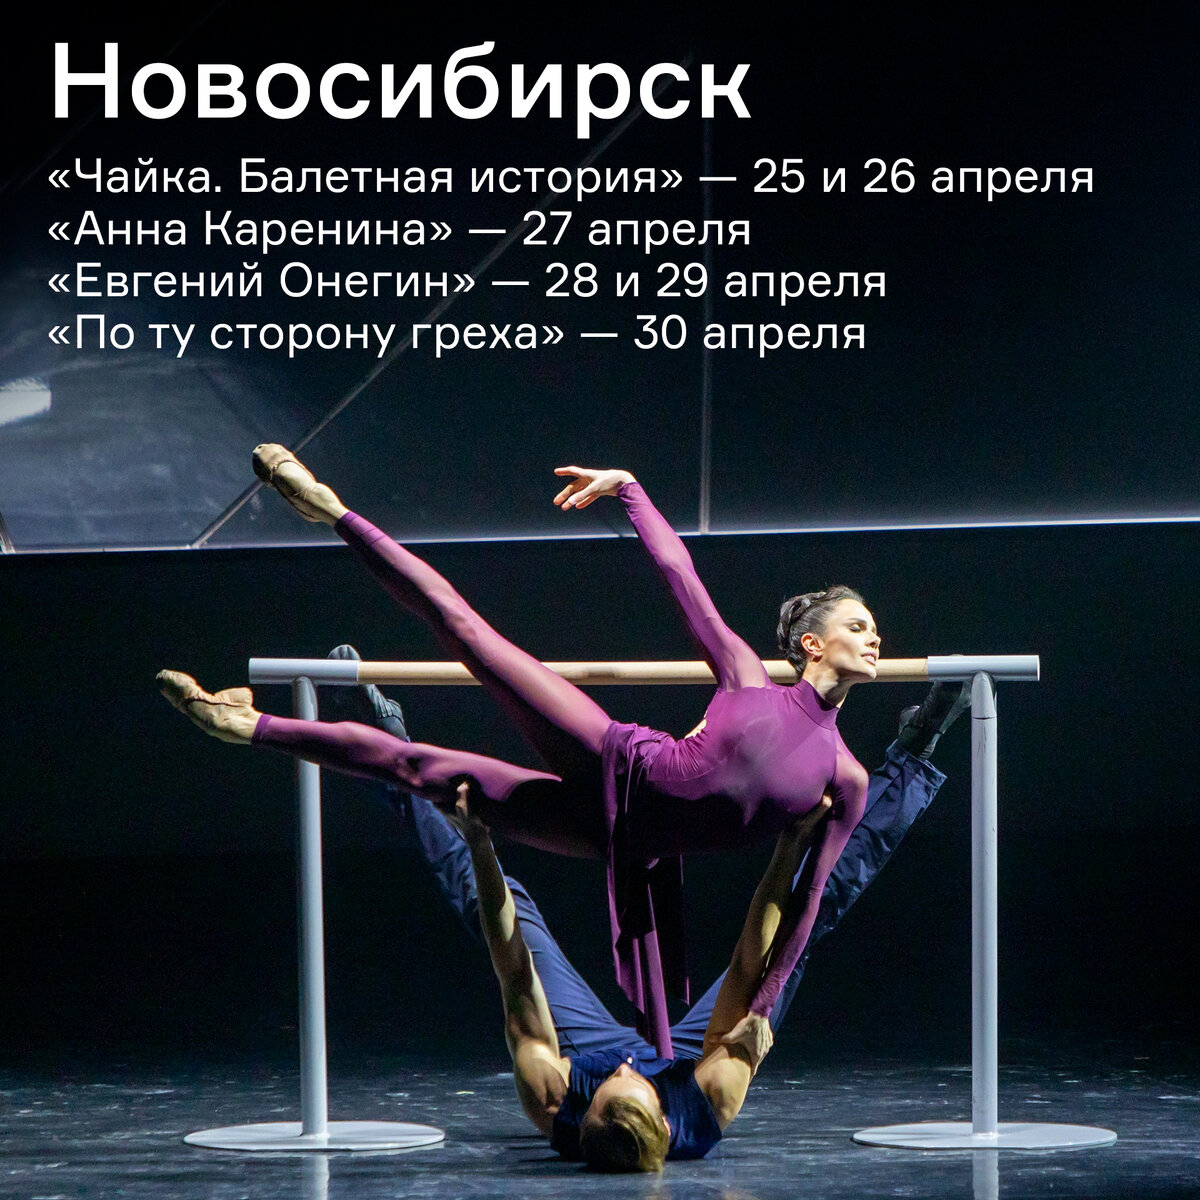 театра балета бориса эйфмана